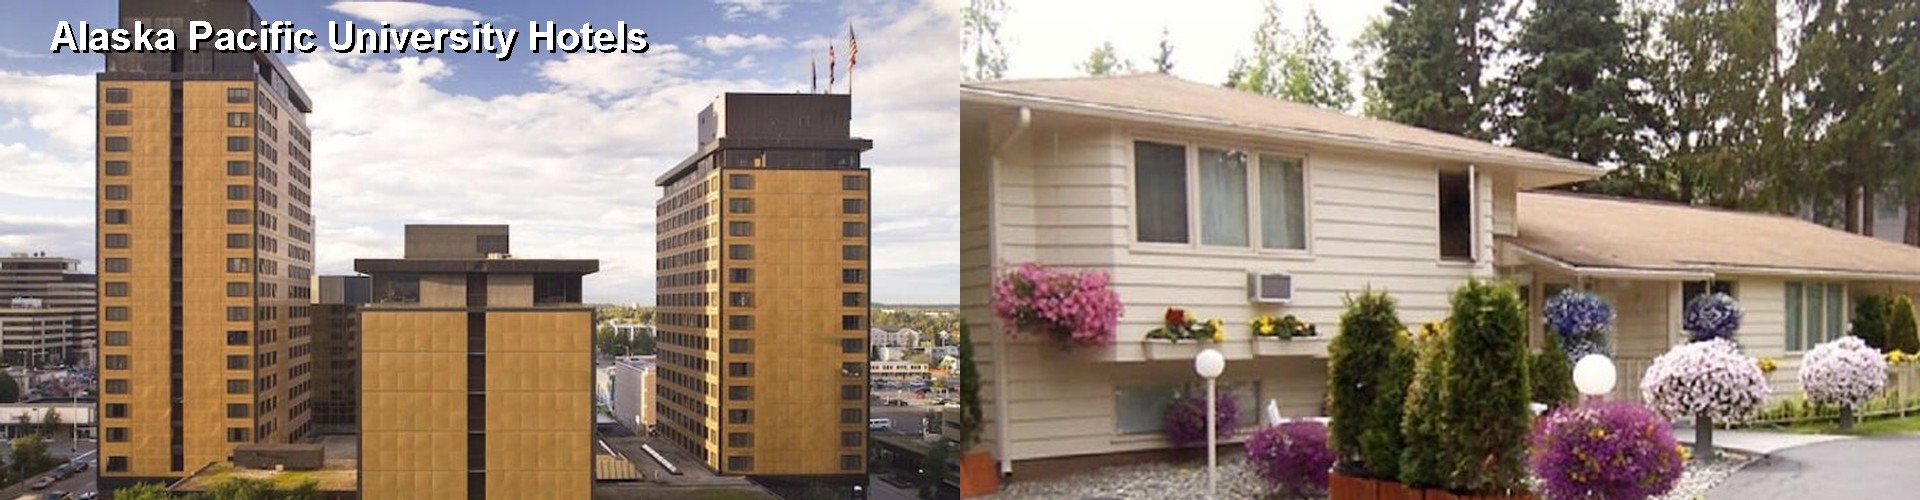 5 Best Hotels near Alaska Pacific University